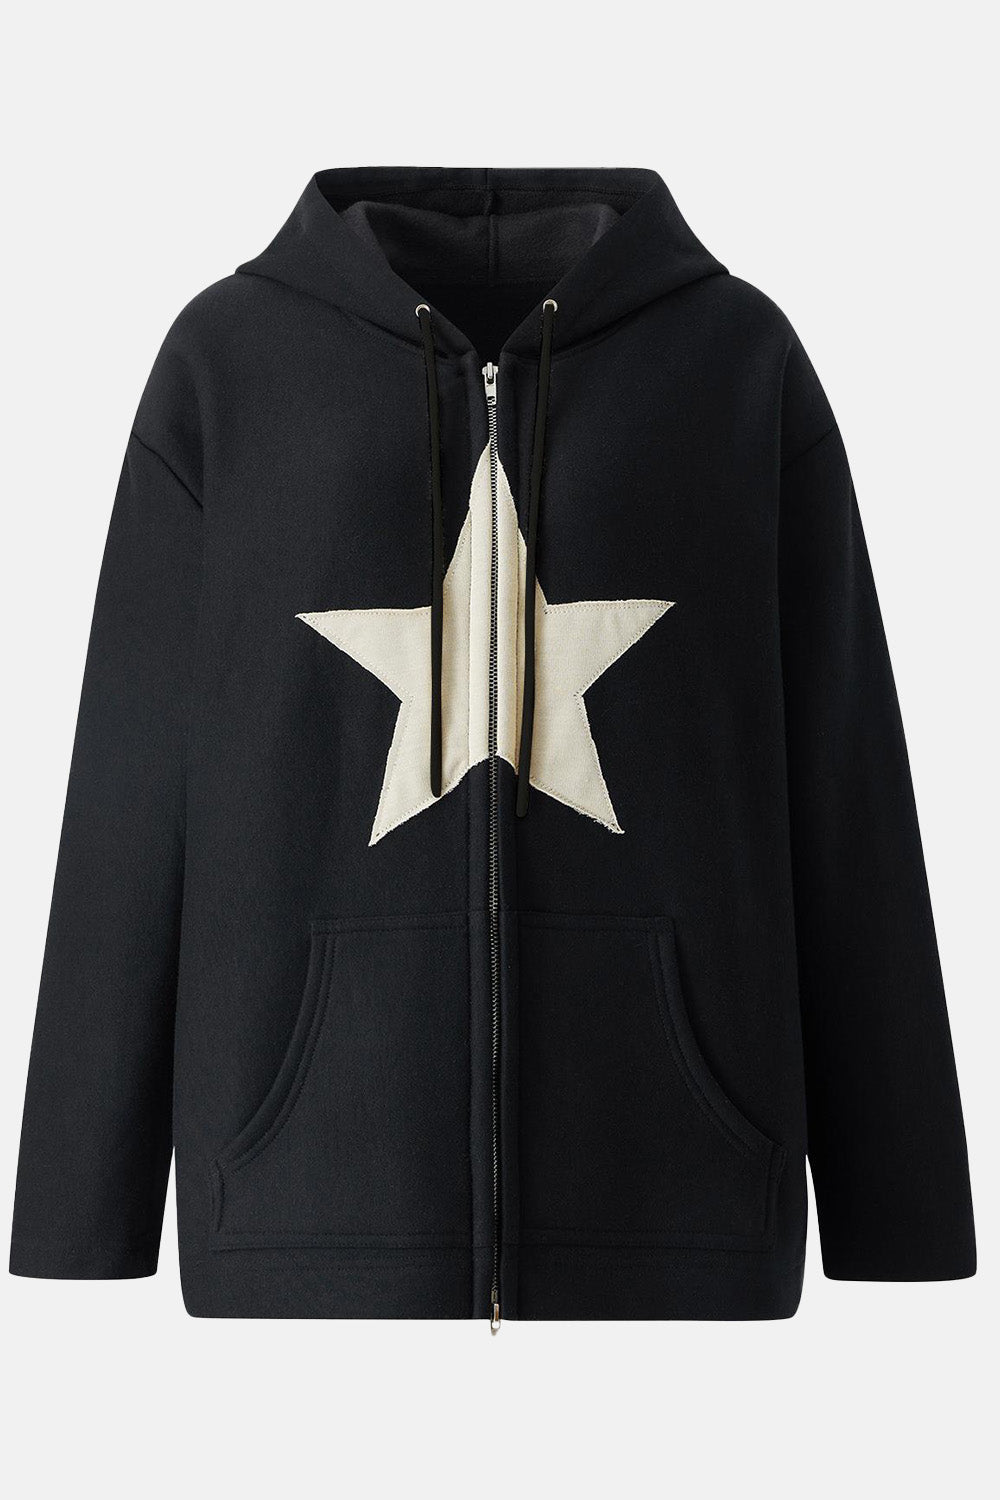 Star Contrast Color Zipper Design Hooded Coat